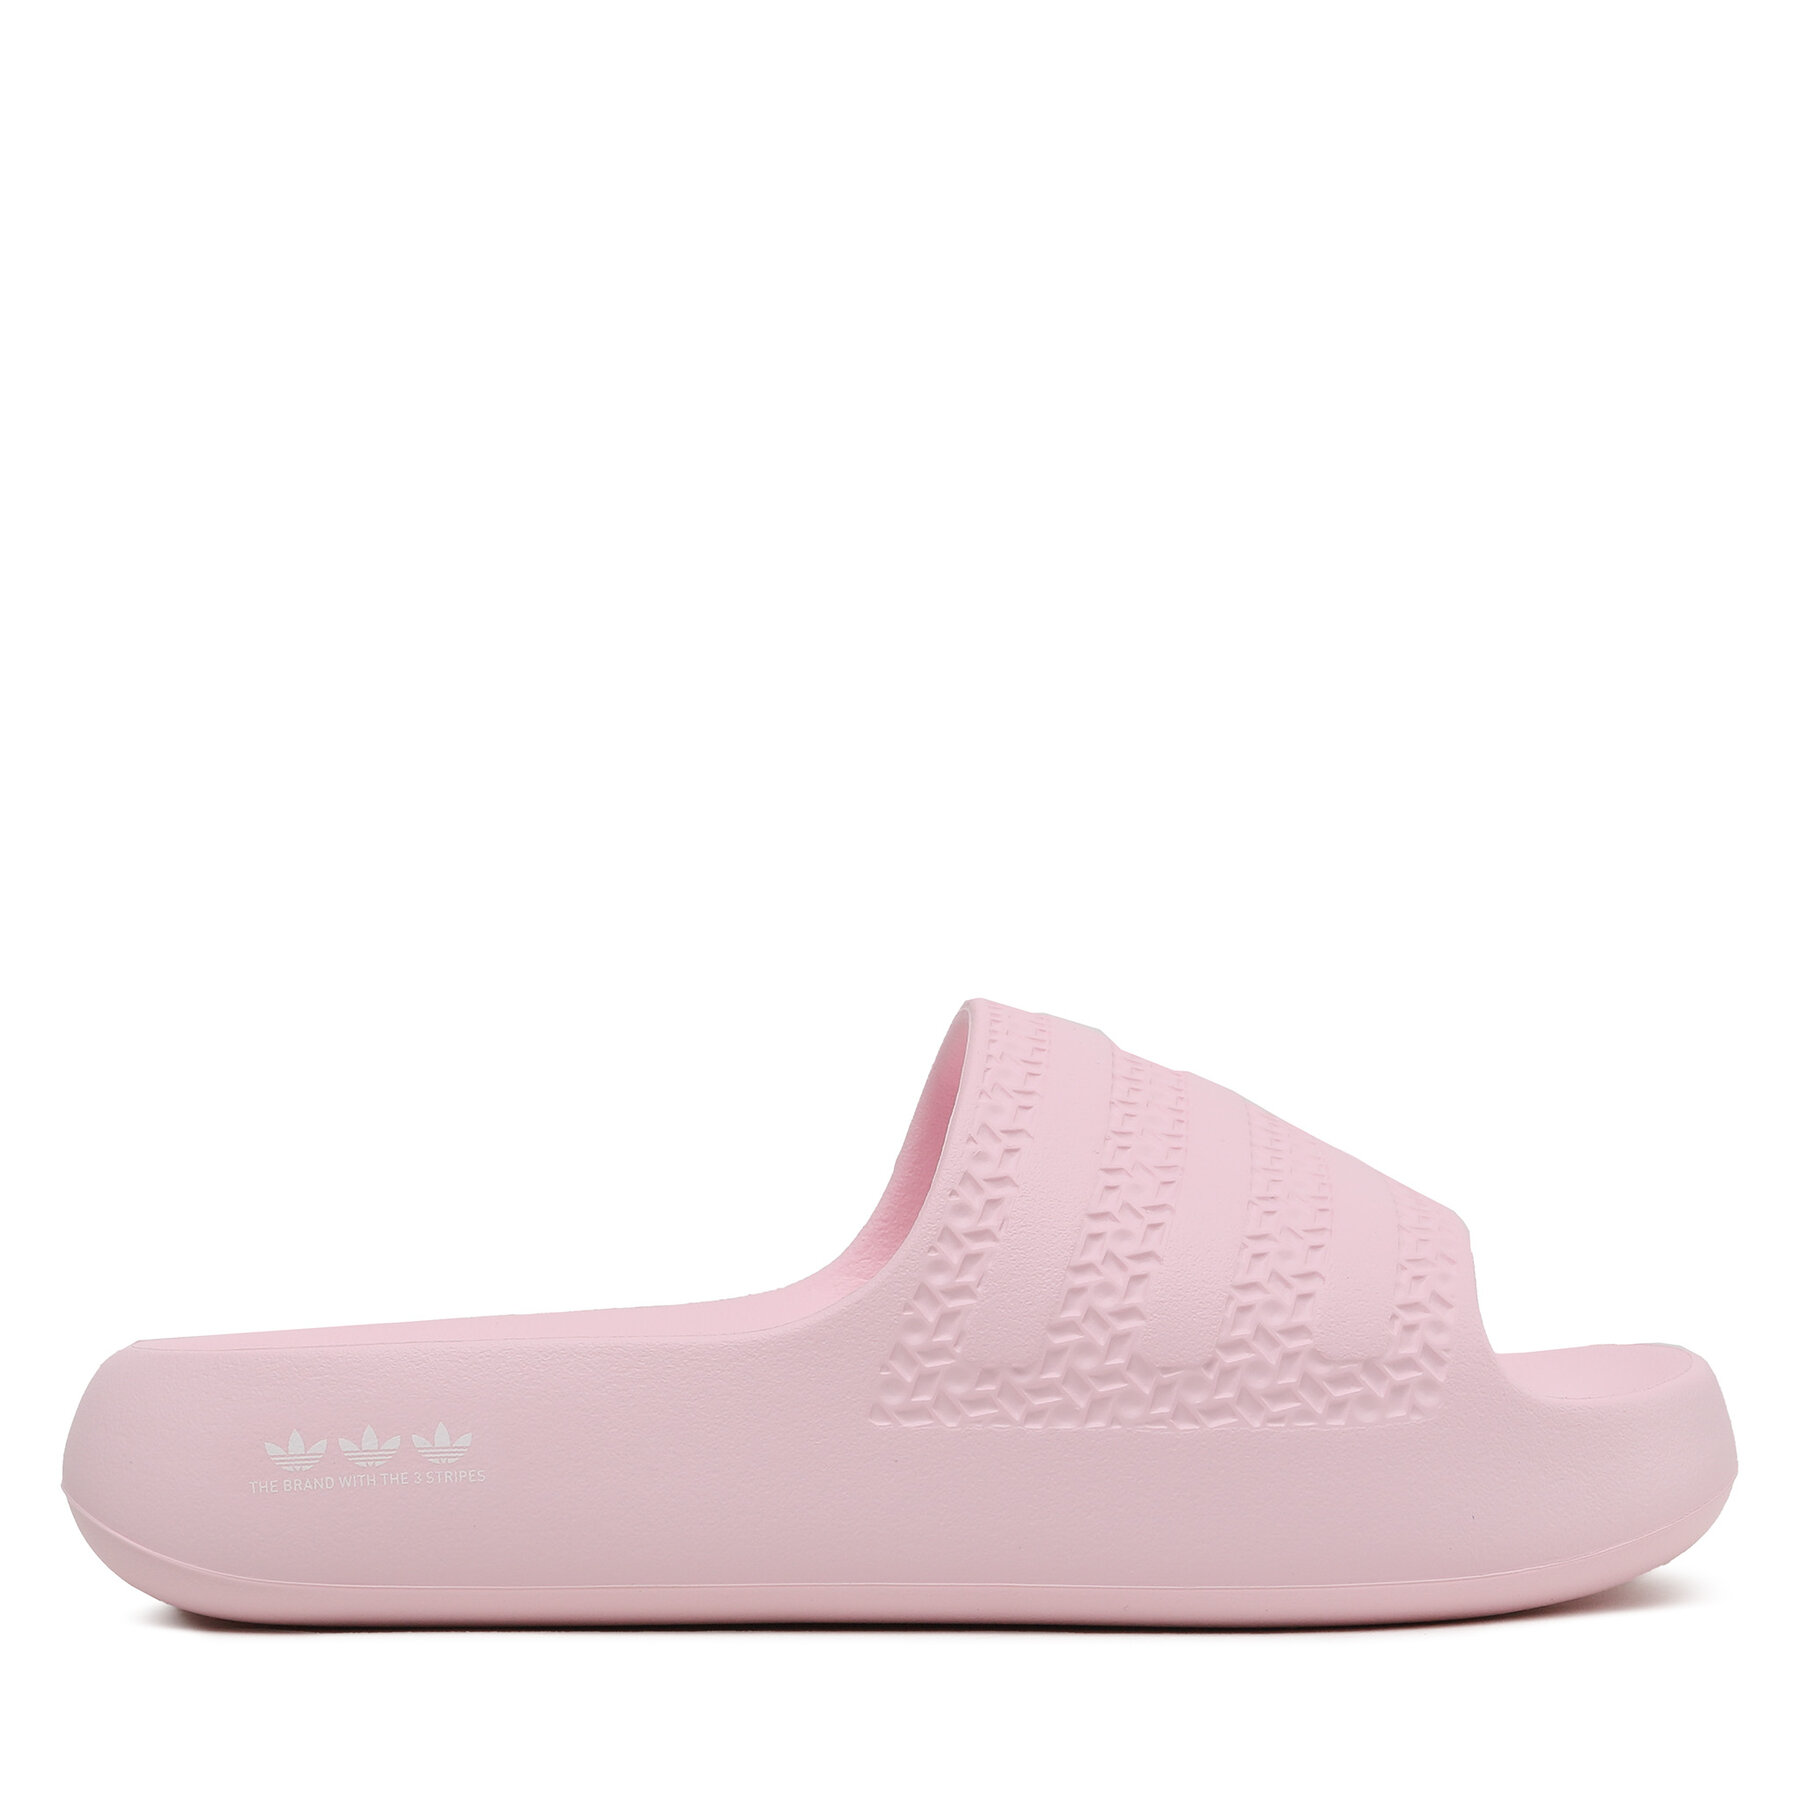 Comprar en oferta Adidas Ayoon Adilette W clear pink/clear pink/cloud white